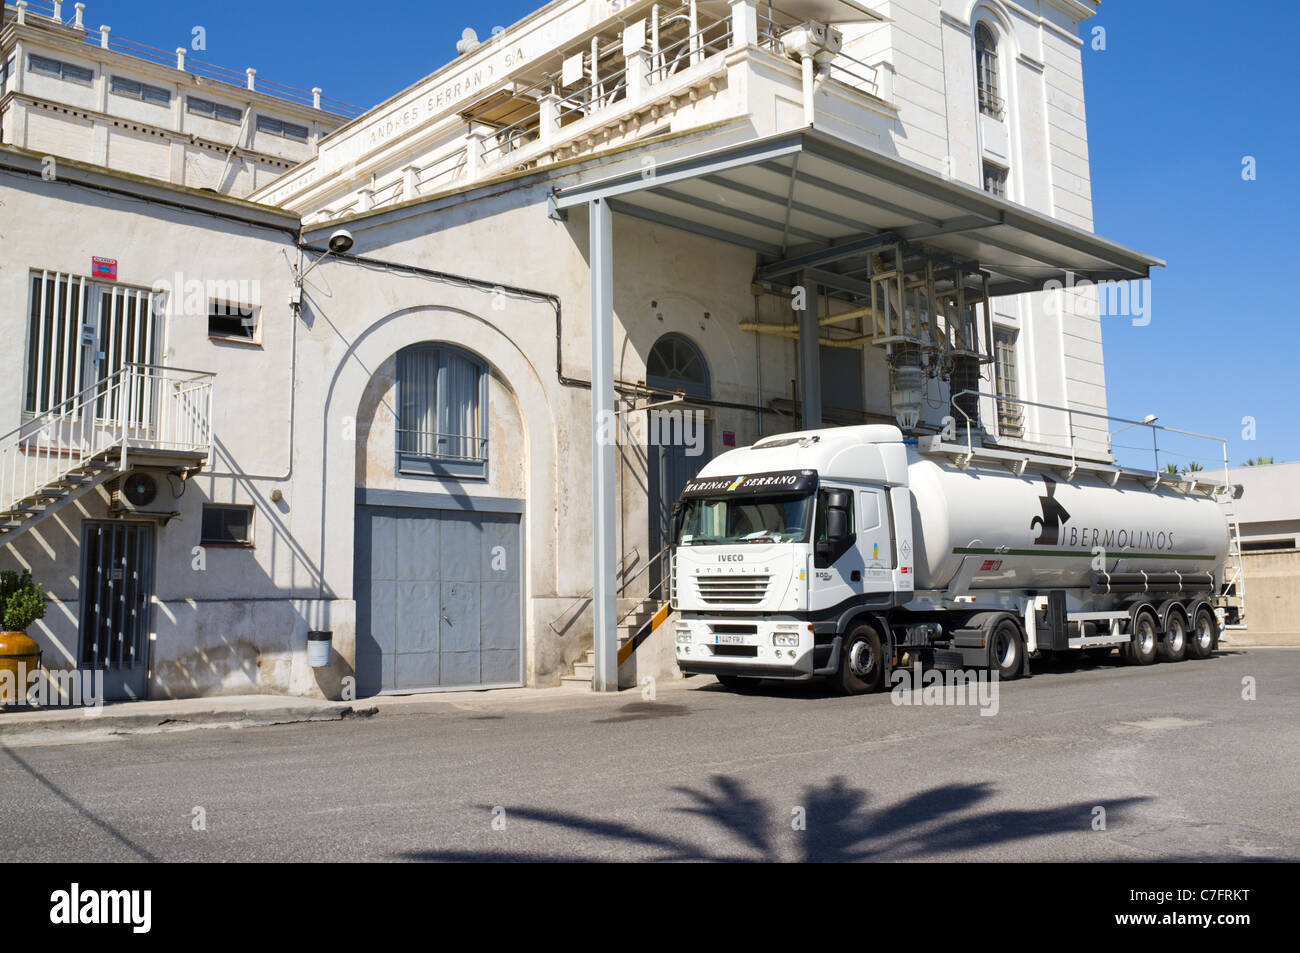 Bulk Flour carrier in loading area, Harinas Serrano, Elche, Spain Stock Photo